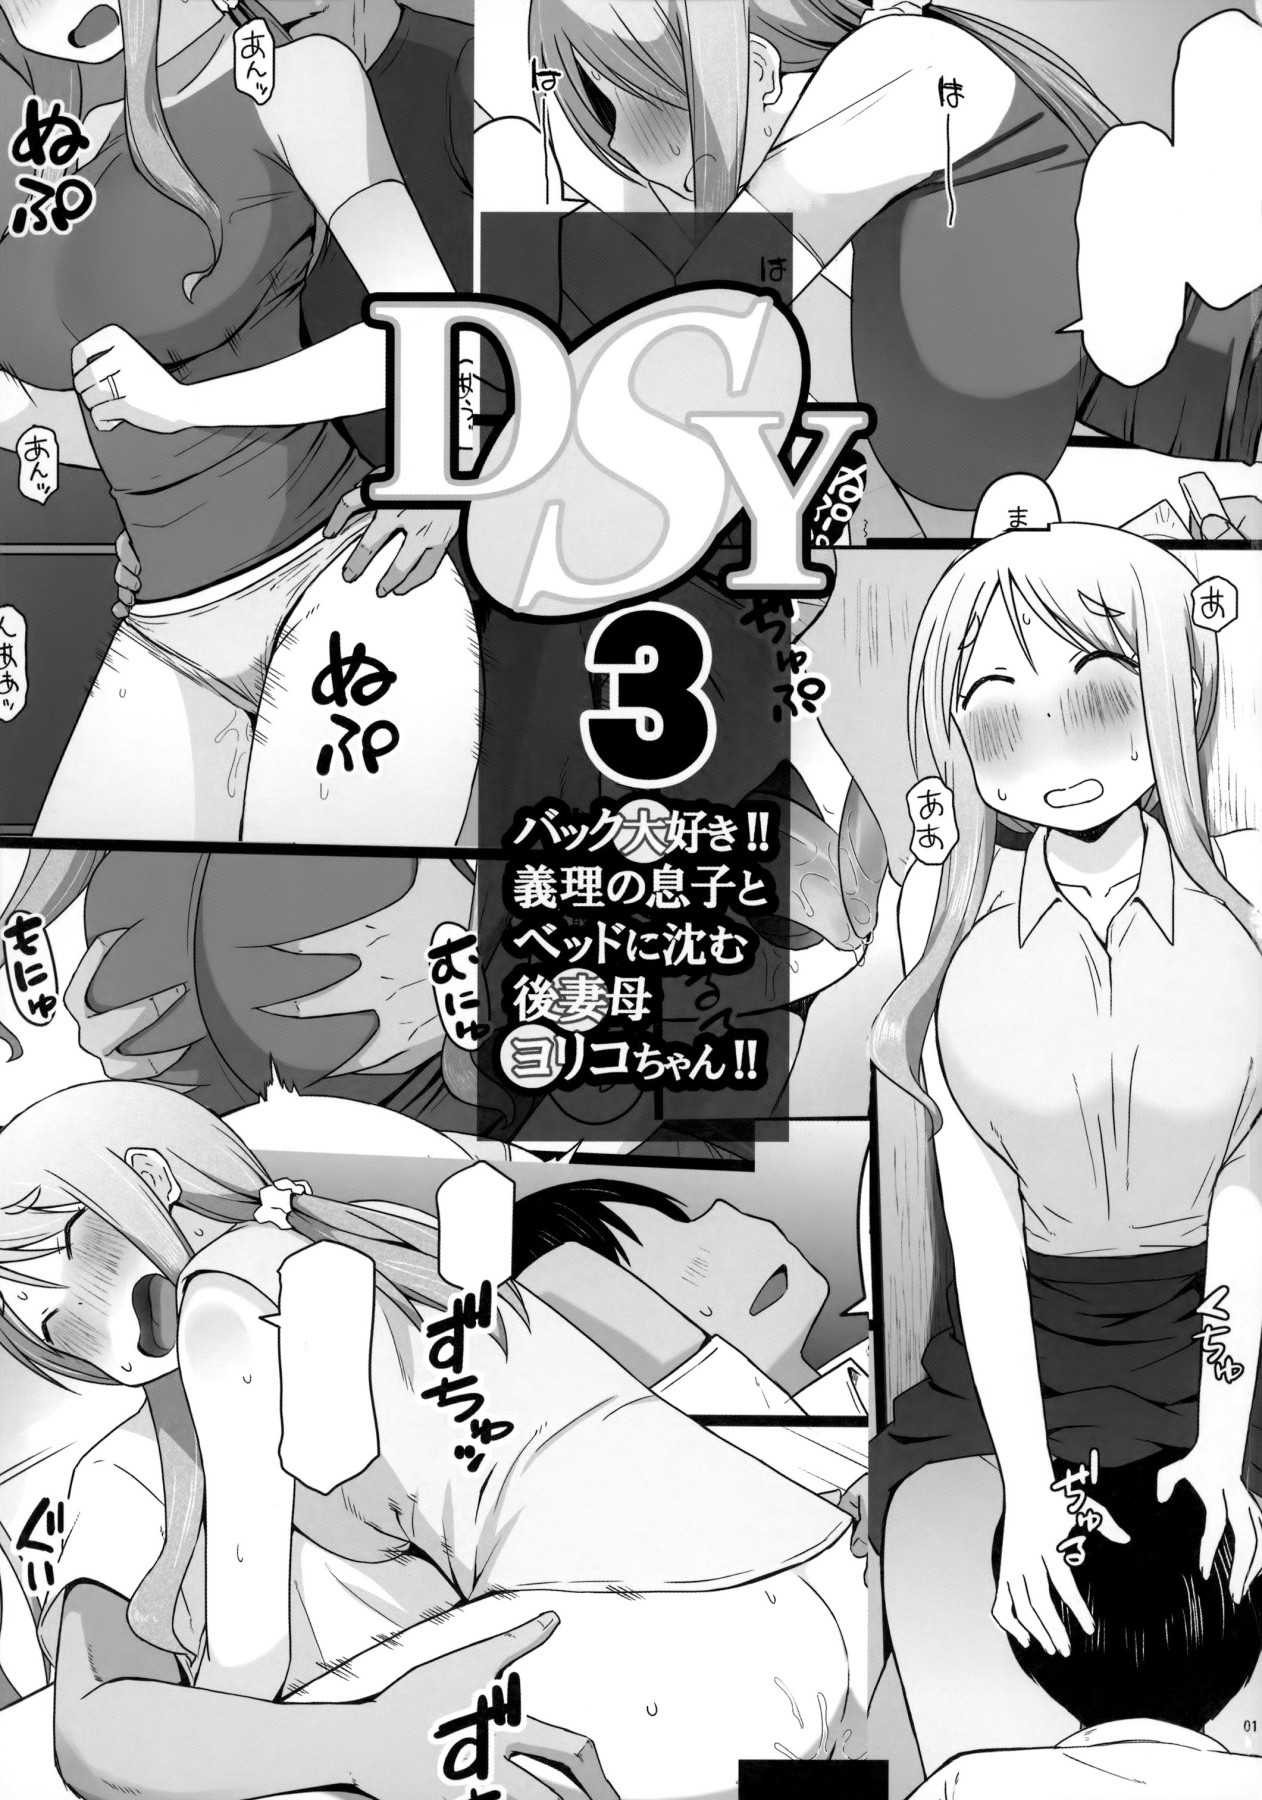 Hentai Manga Comic-Angel's stroke 132 DSY 3-Read-2